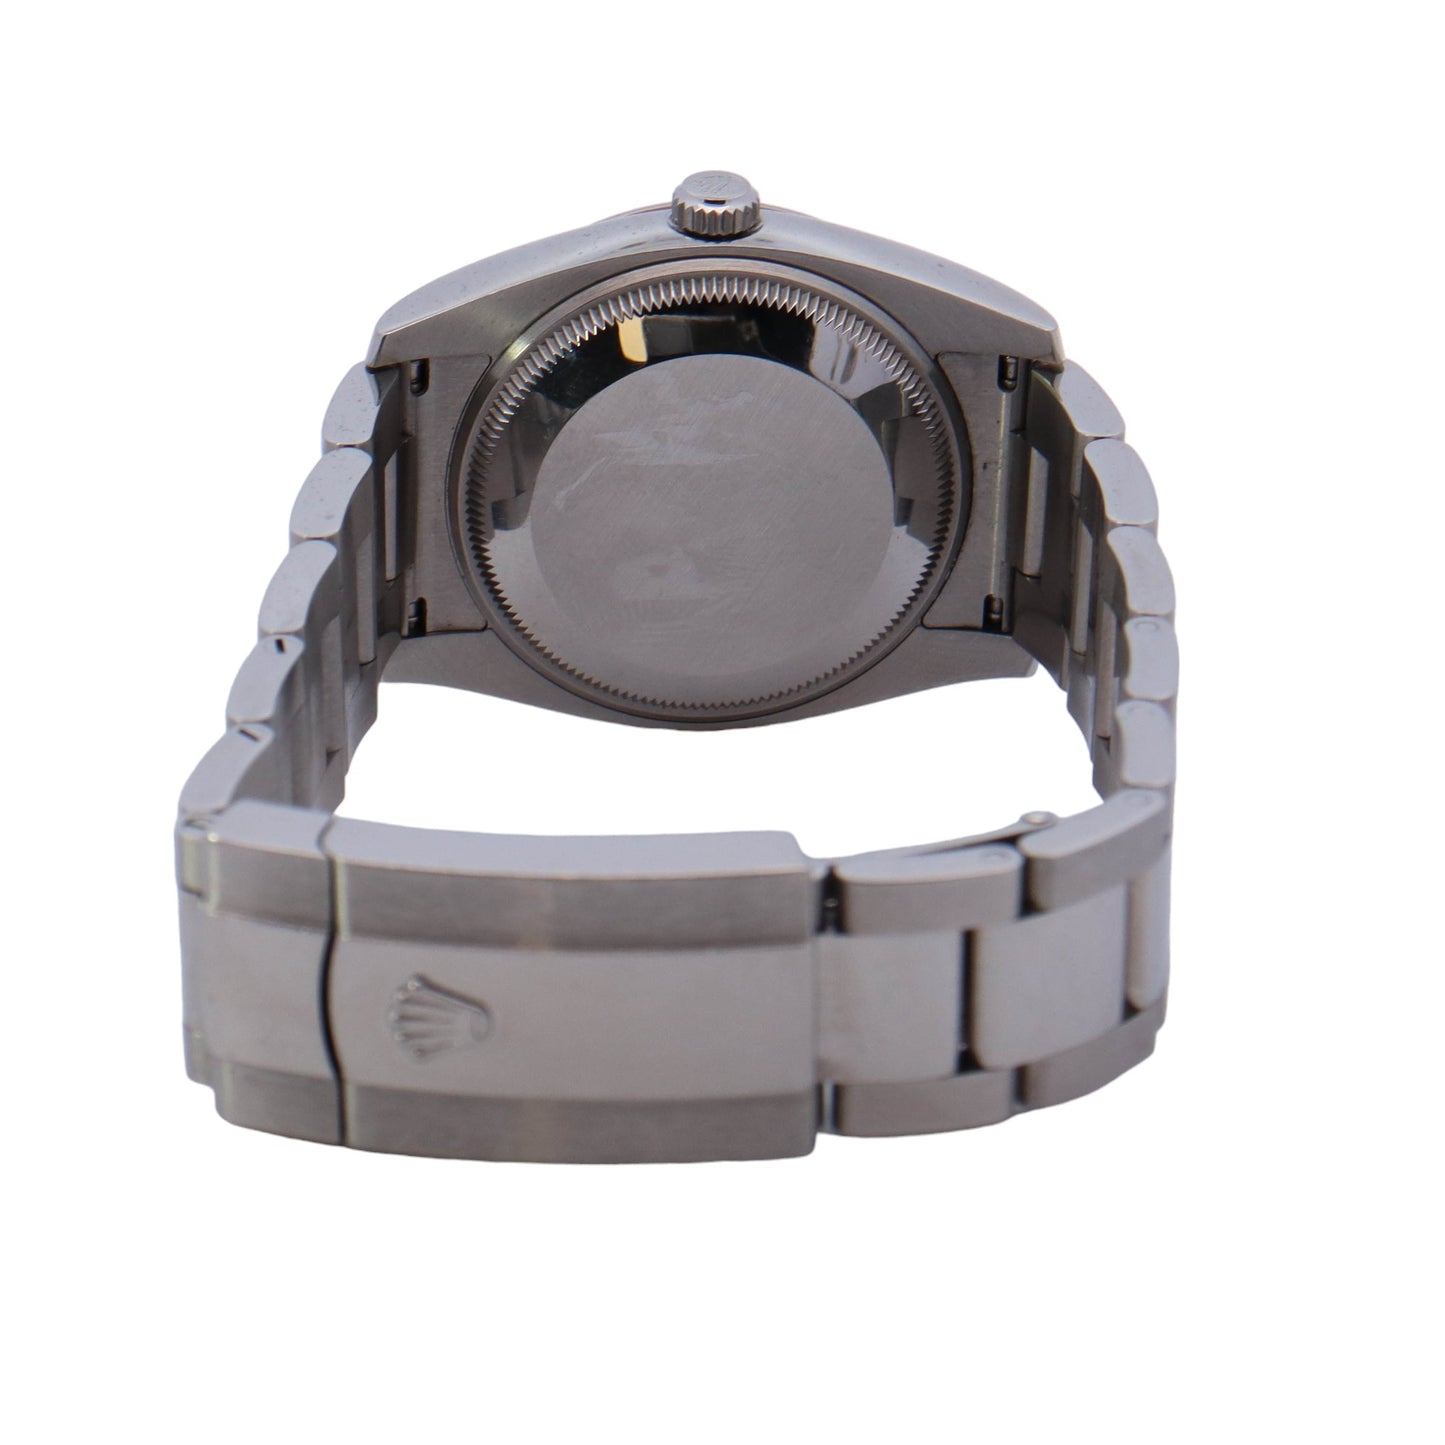 Rolex Oyster Perpetual Date Stainless Steel 34mm Arabic & Diamond Dot Dial Watch Reference# 115234 - Happy Jewelers Fine Jewelry Lifetime Warranty